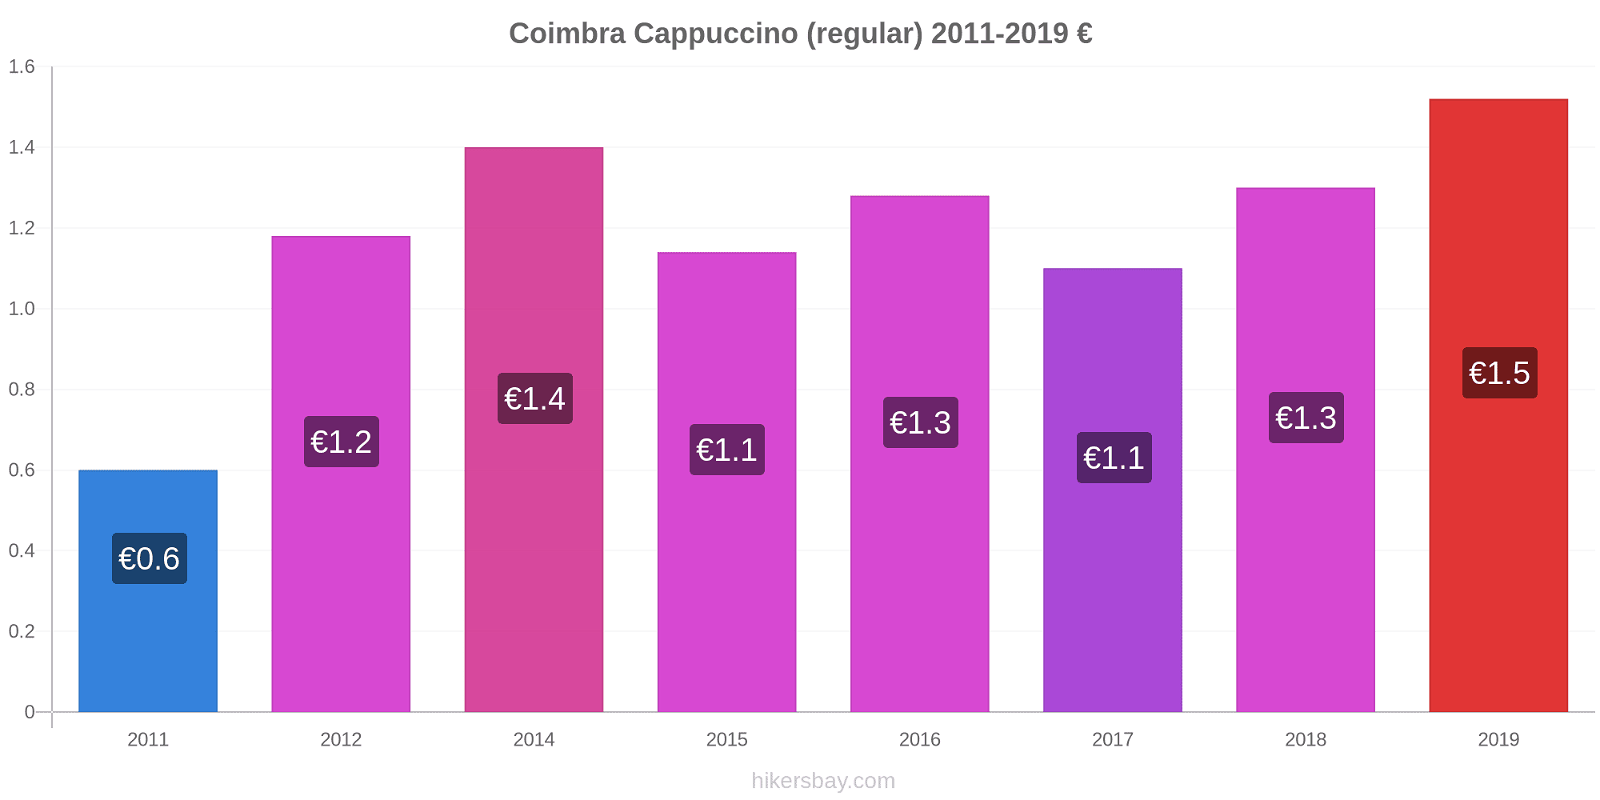 Coimbra price changes Cappuccino (regular) hikersbay.com